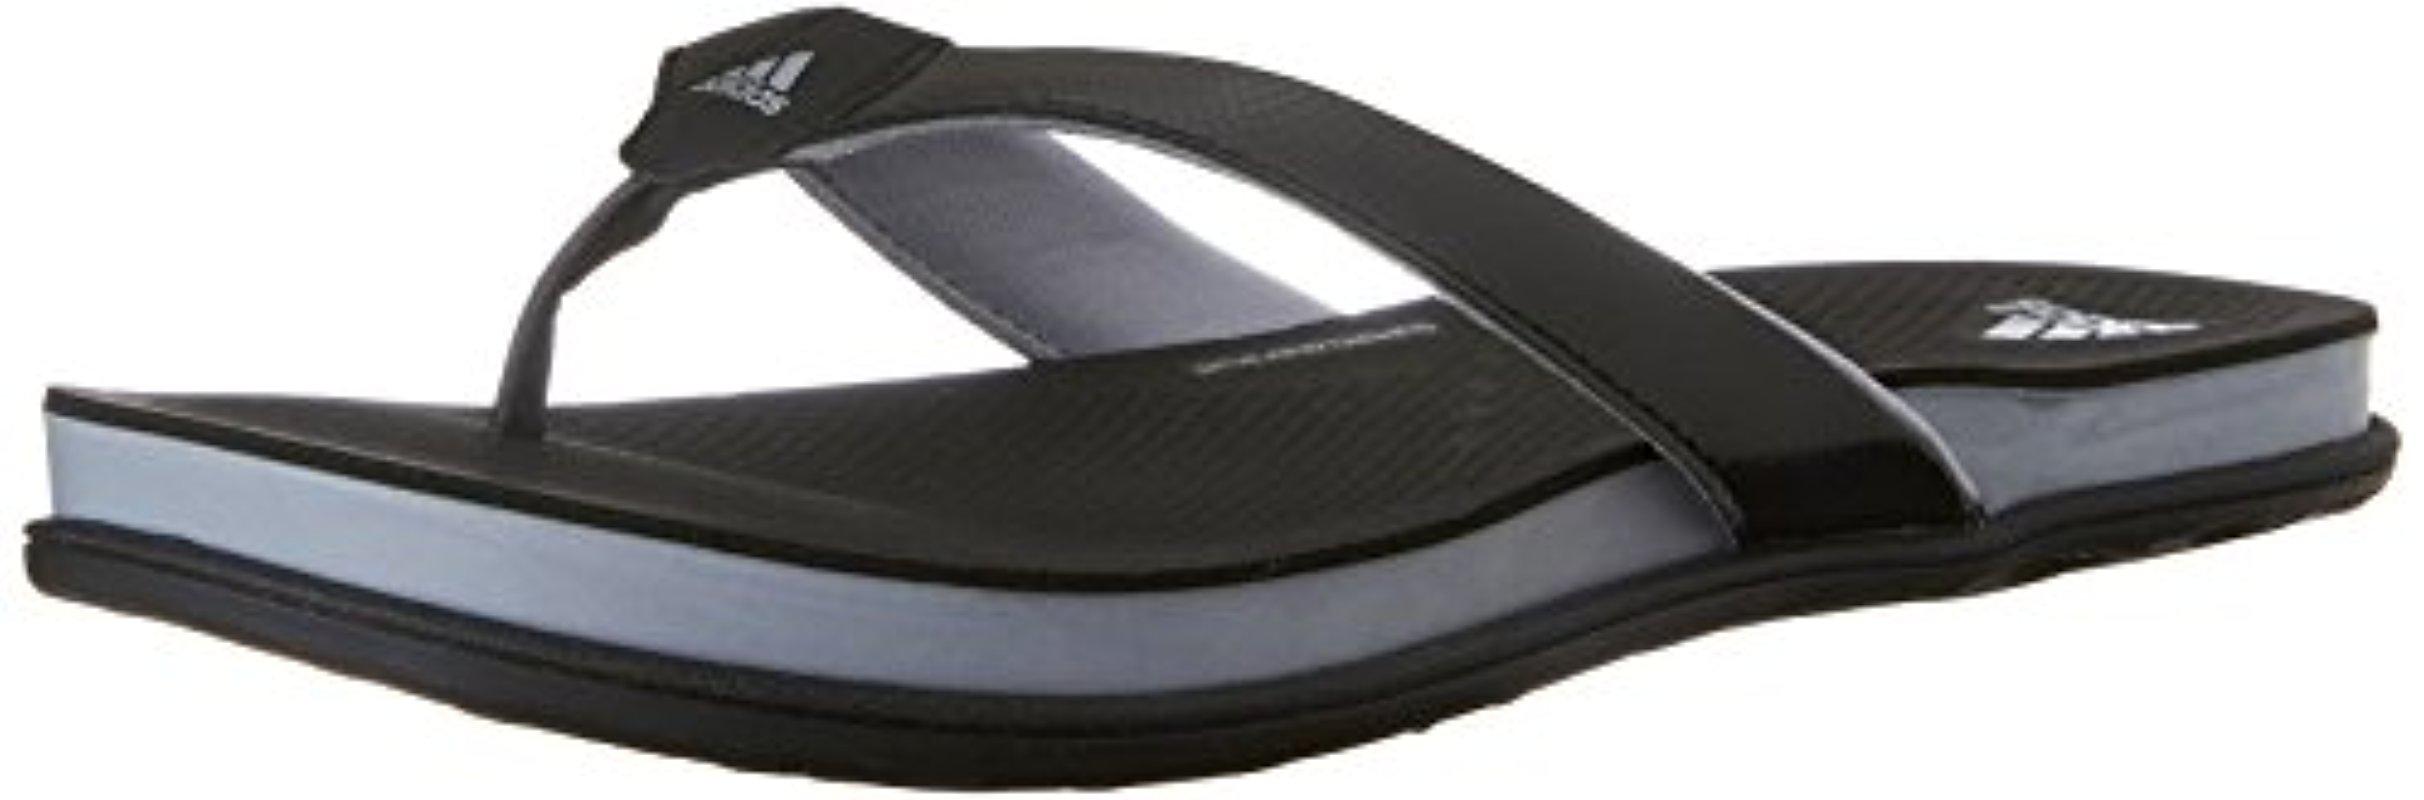 adidas Supercloud Plus Thong Athletic Slide Sandals in Black/Mid  Grey/Silver (Black) | Lyst